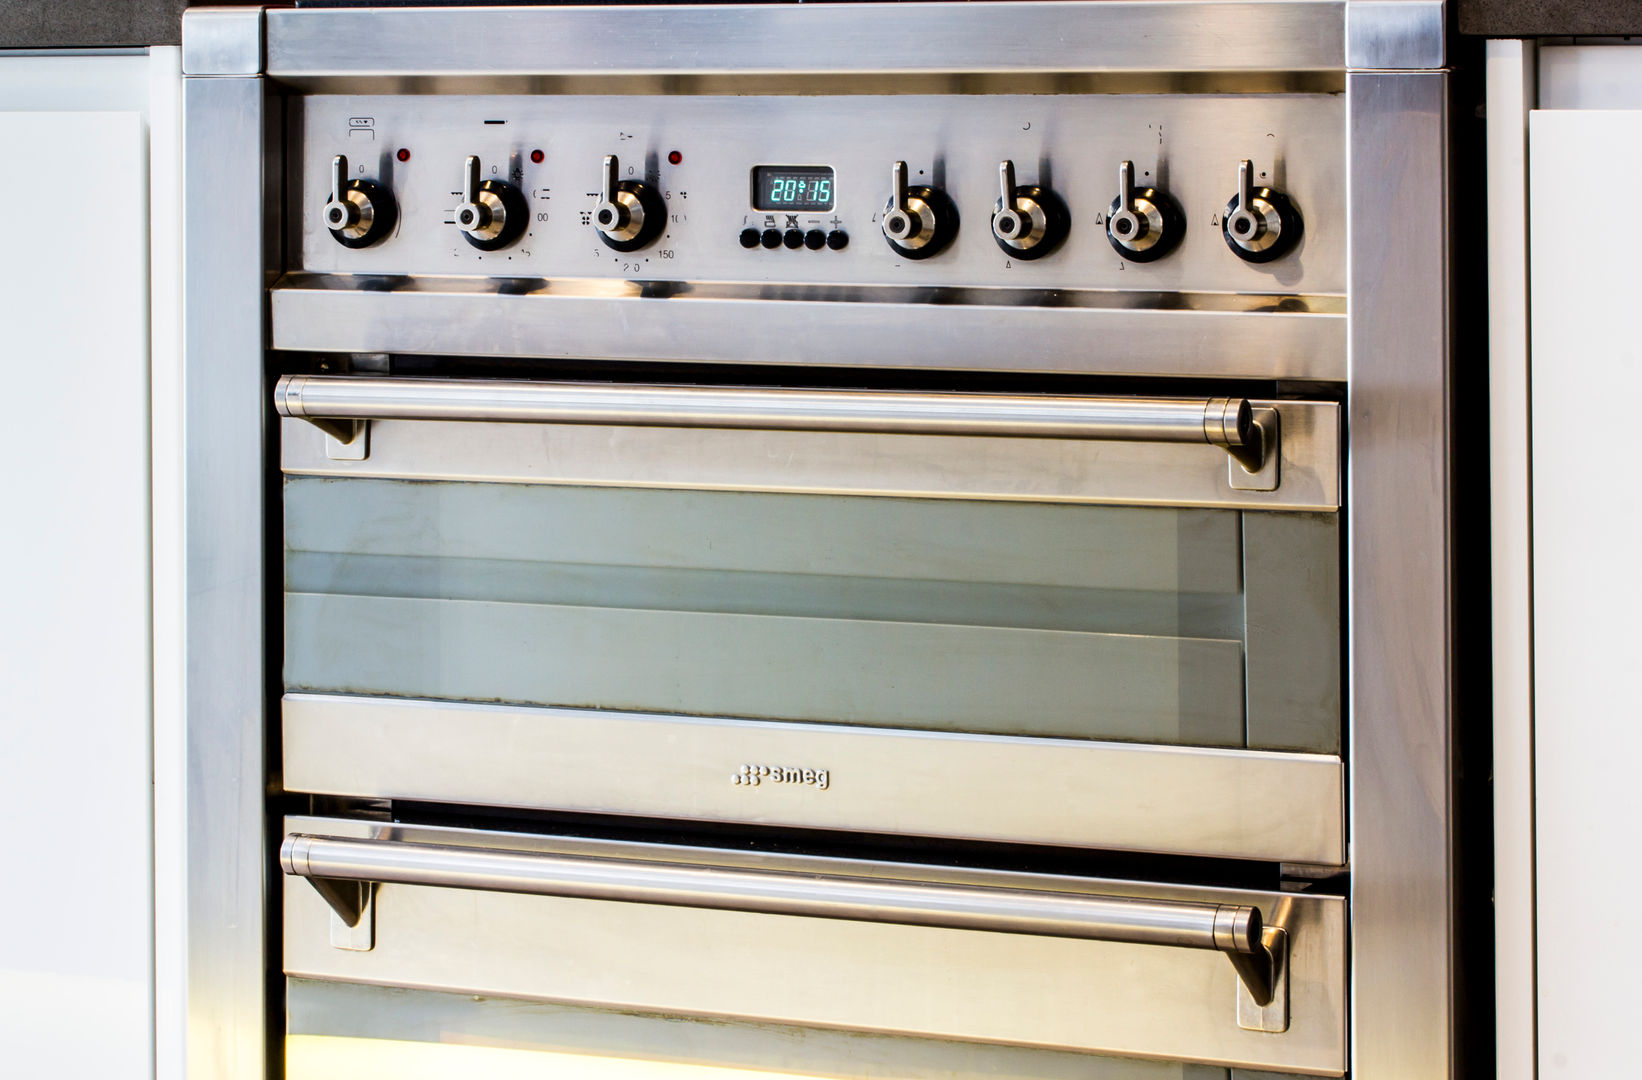 Modern cooker and oven Affleck Property Services Modern Mutfak Aksesuarlar & Tekstil Ürünleri